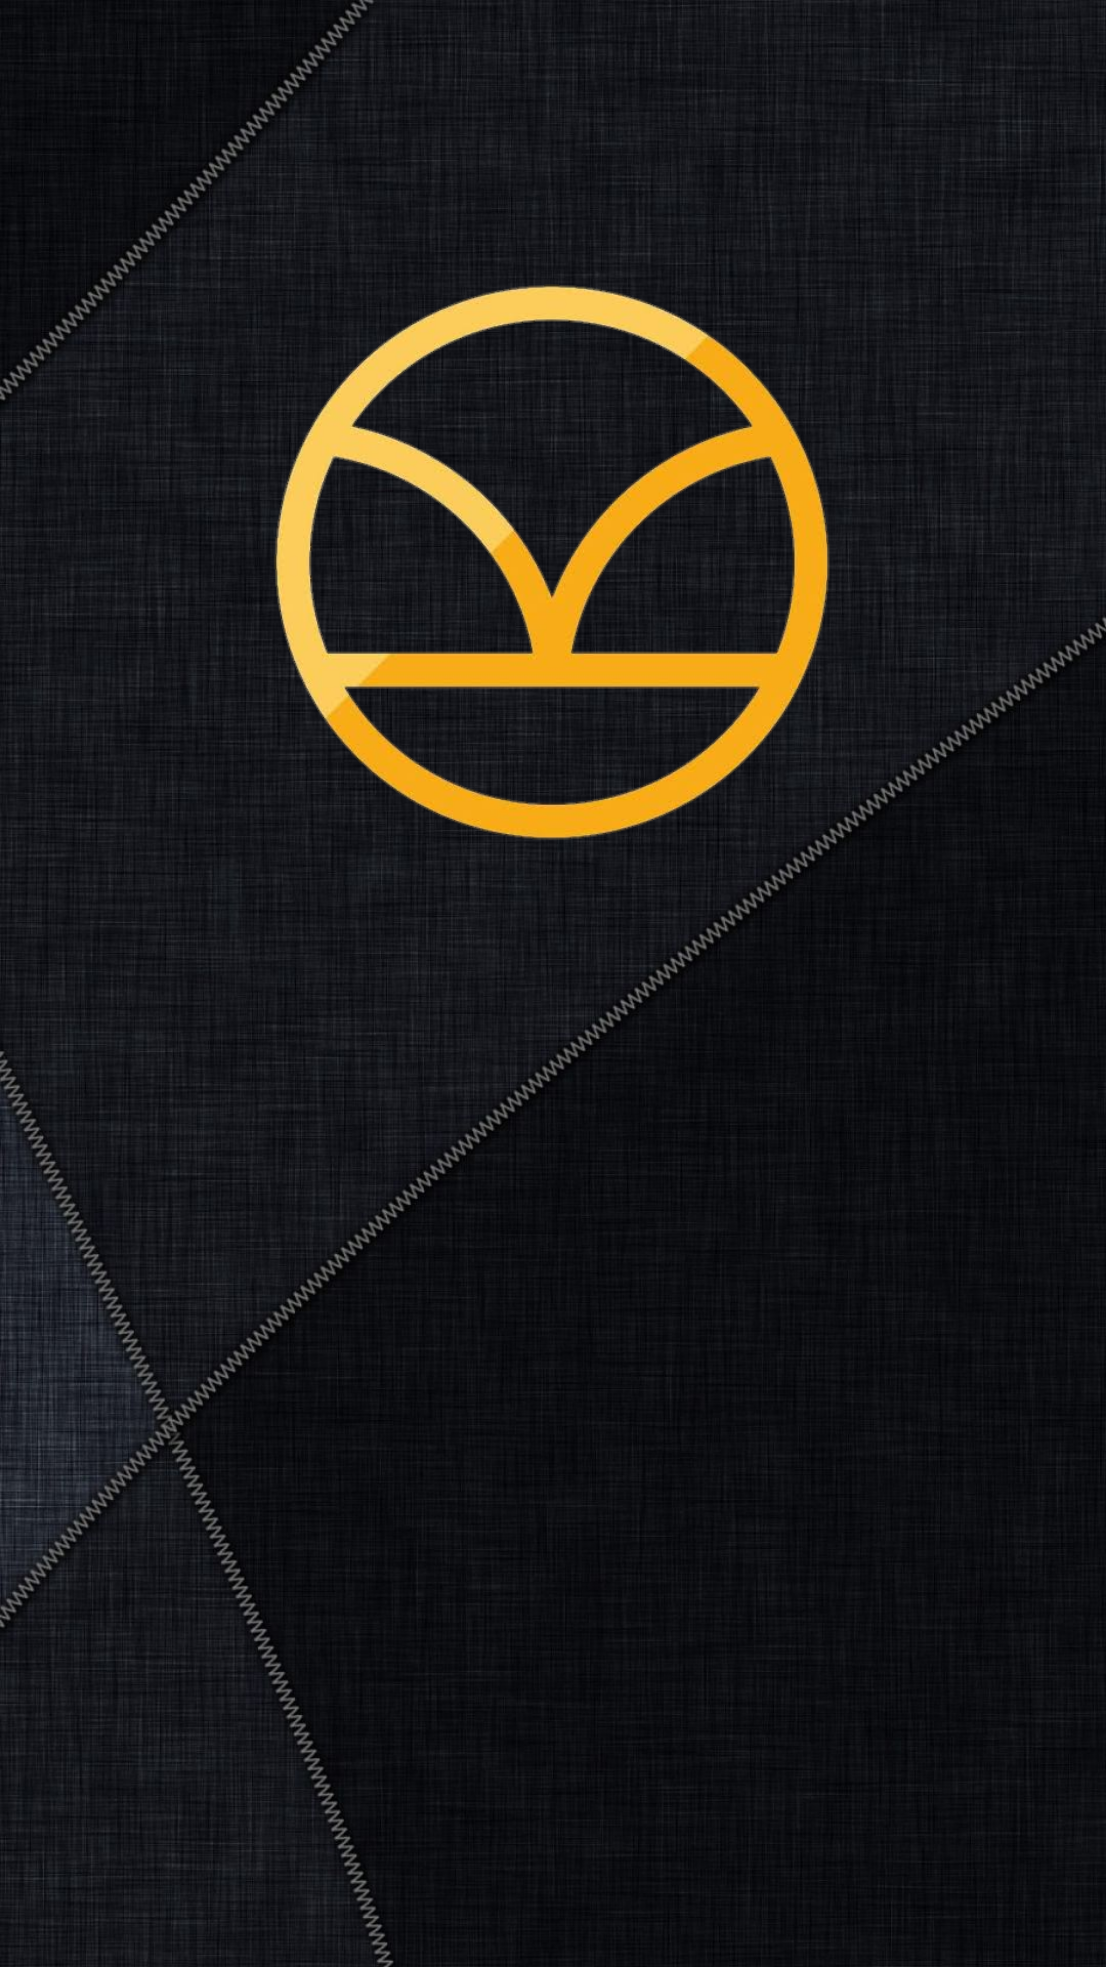 kingsman wallpaper,black,logo,yellow,t shirt,sleeve